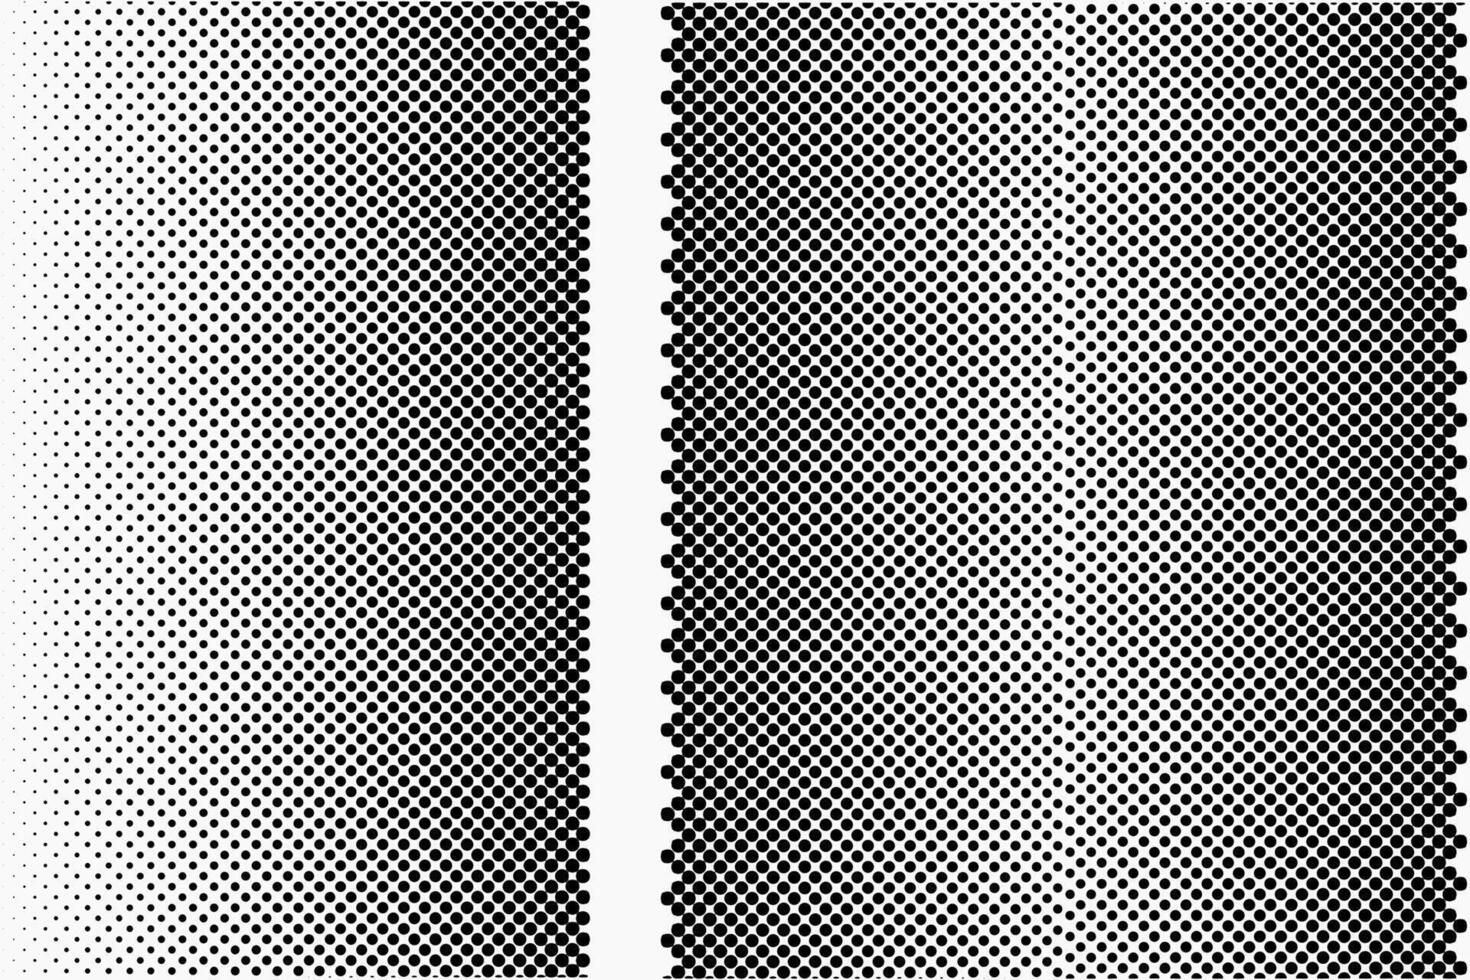 Abstract black halftone vector illustration.